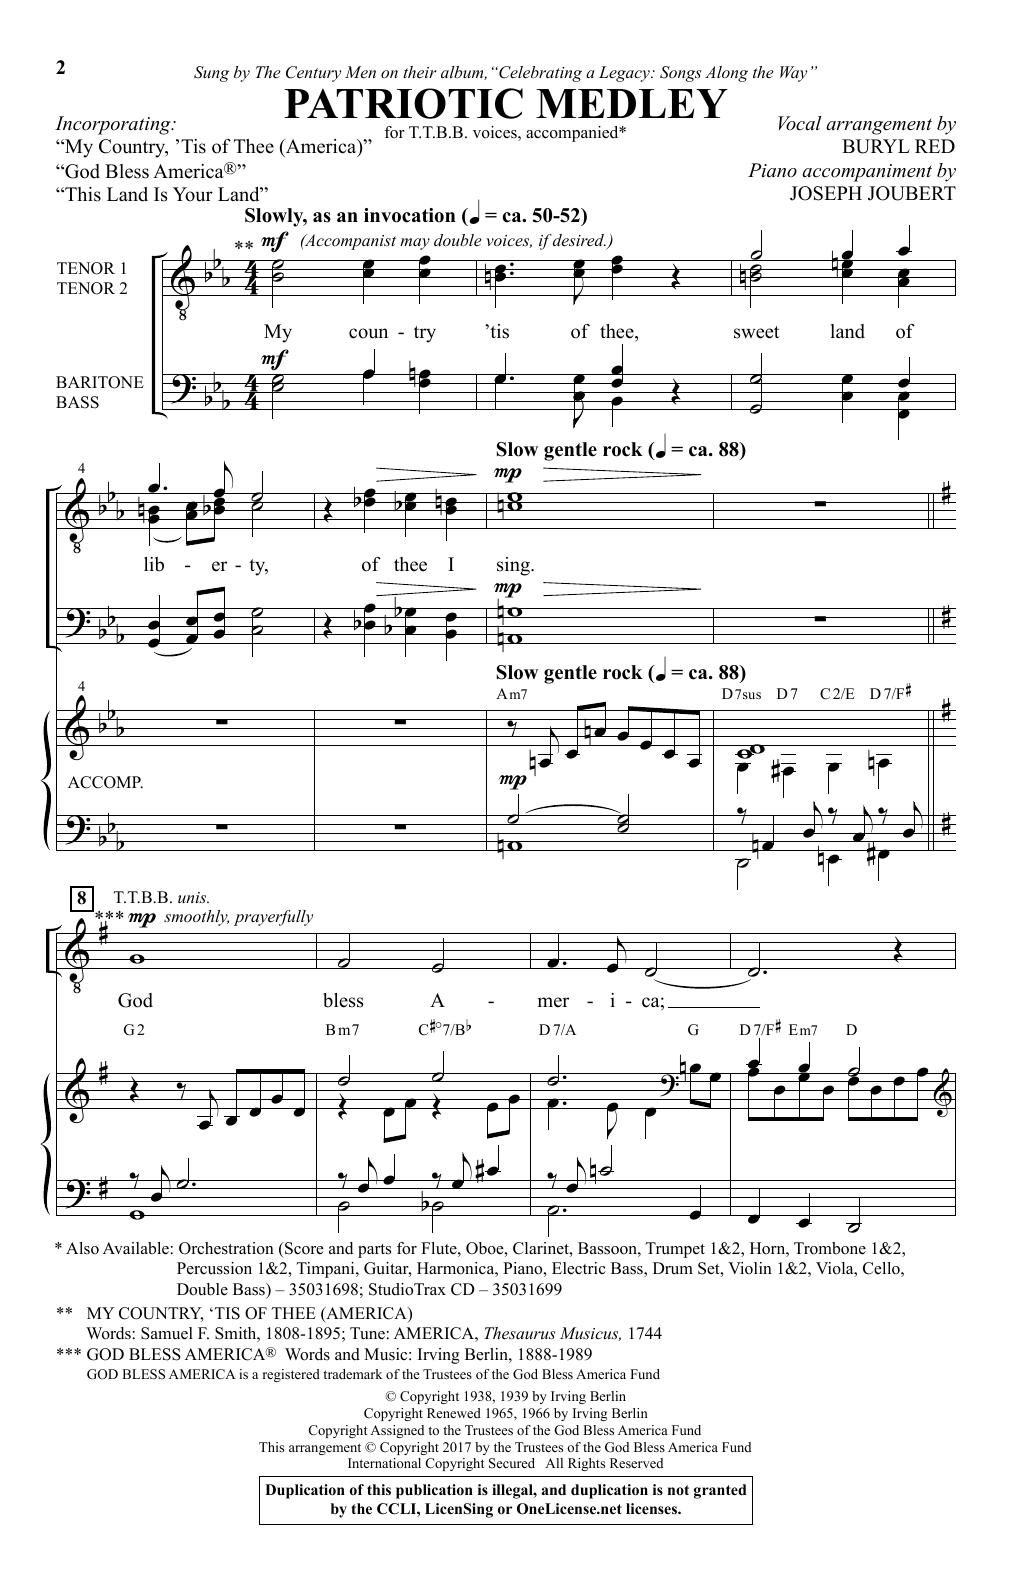 Buryl Red Patriotic Medley Sheet Music Notes & Chords for TTBB - Download or Print PDF